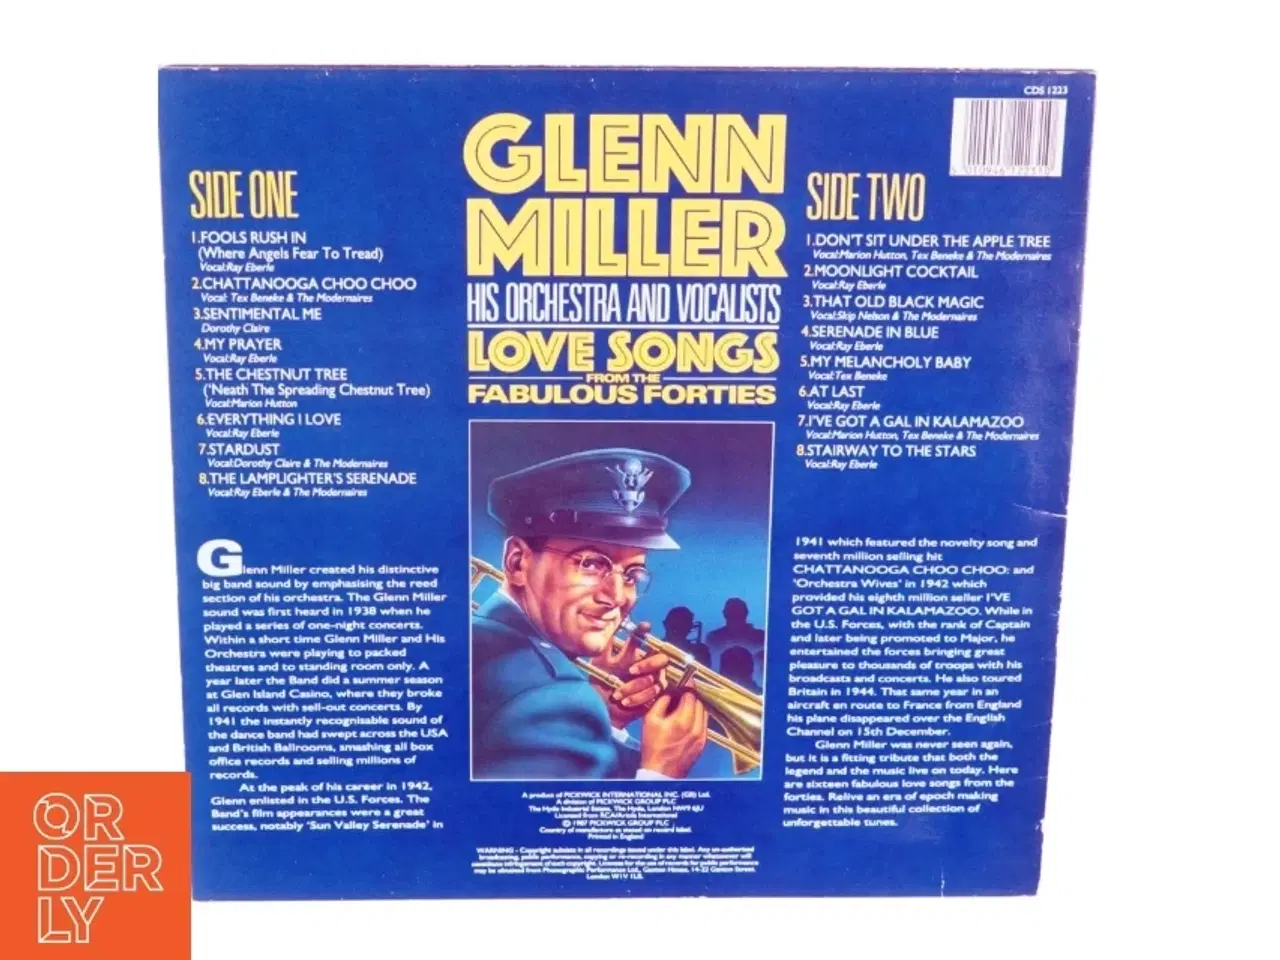 Billede 2 - "Love songs from the fabulous forties" af Glenn Miller